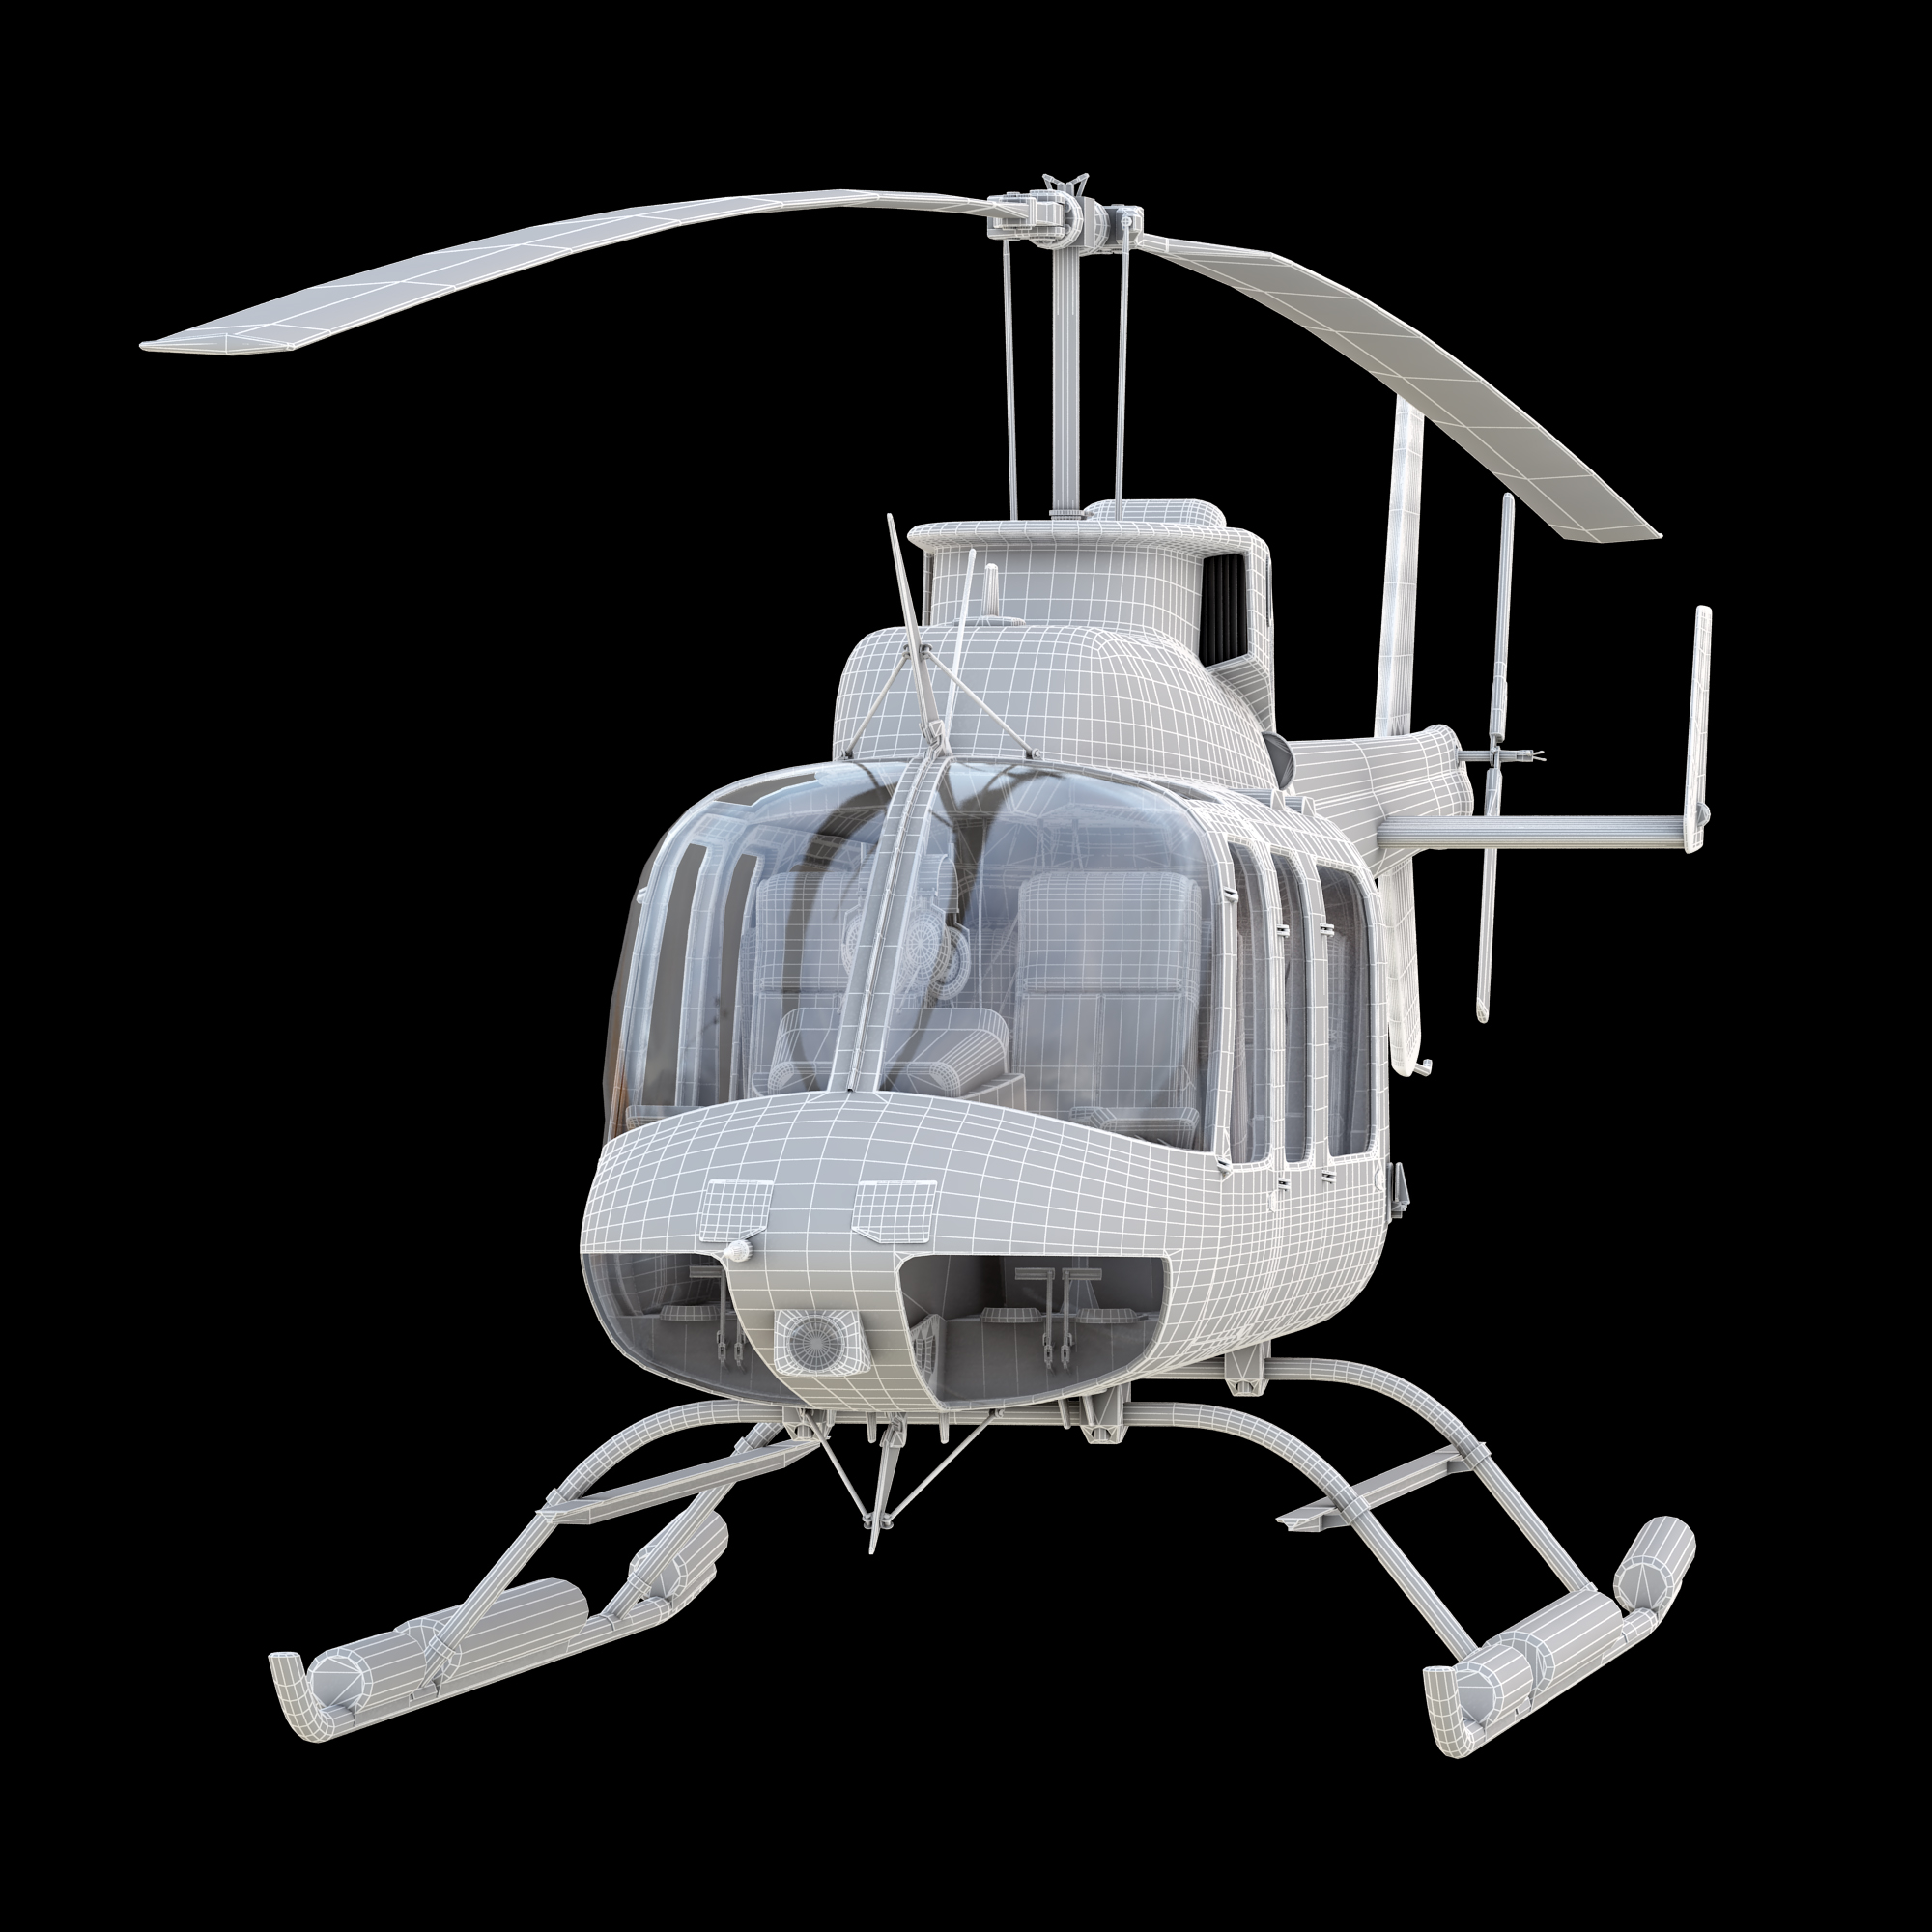 贝尔（Bellhelicopter）的简单介绍